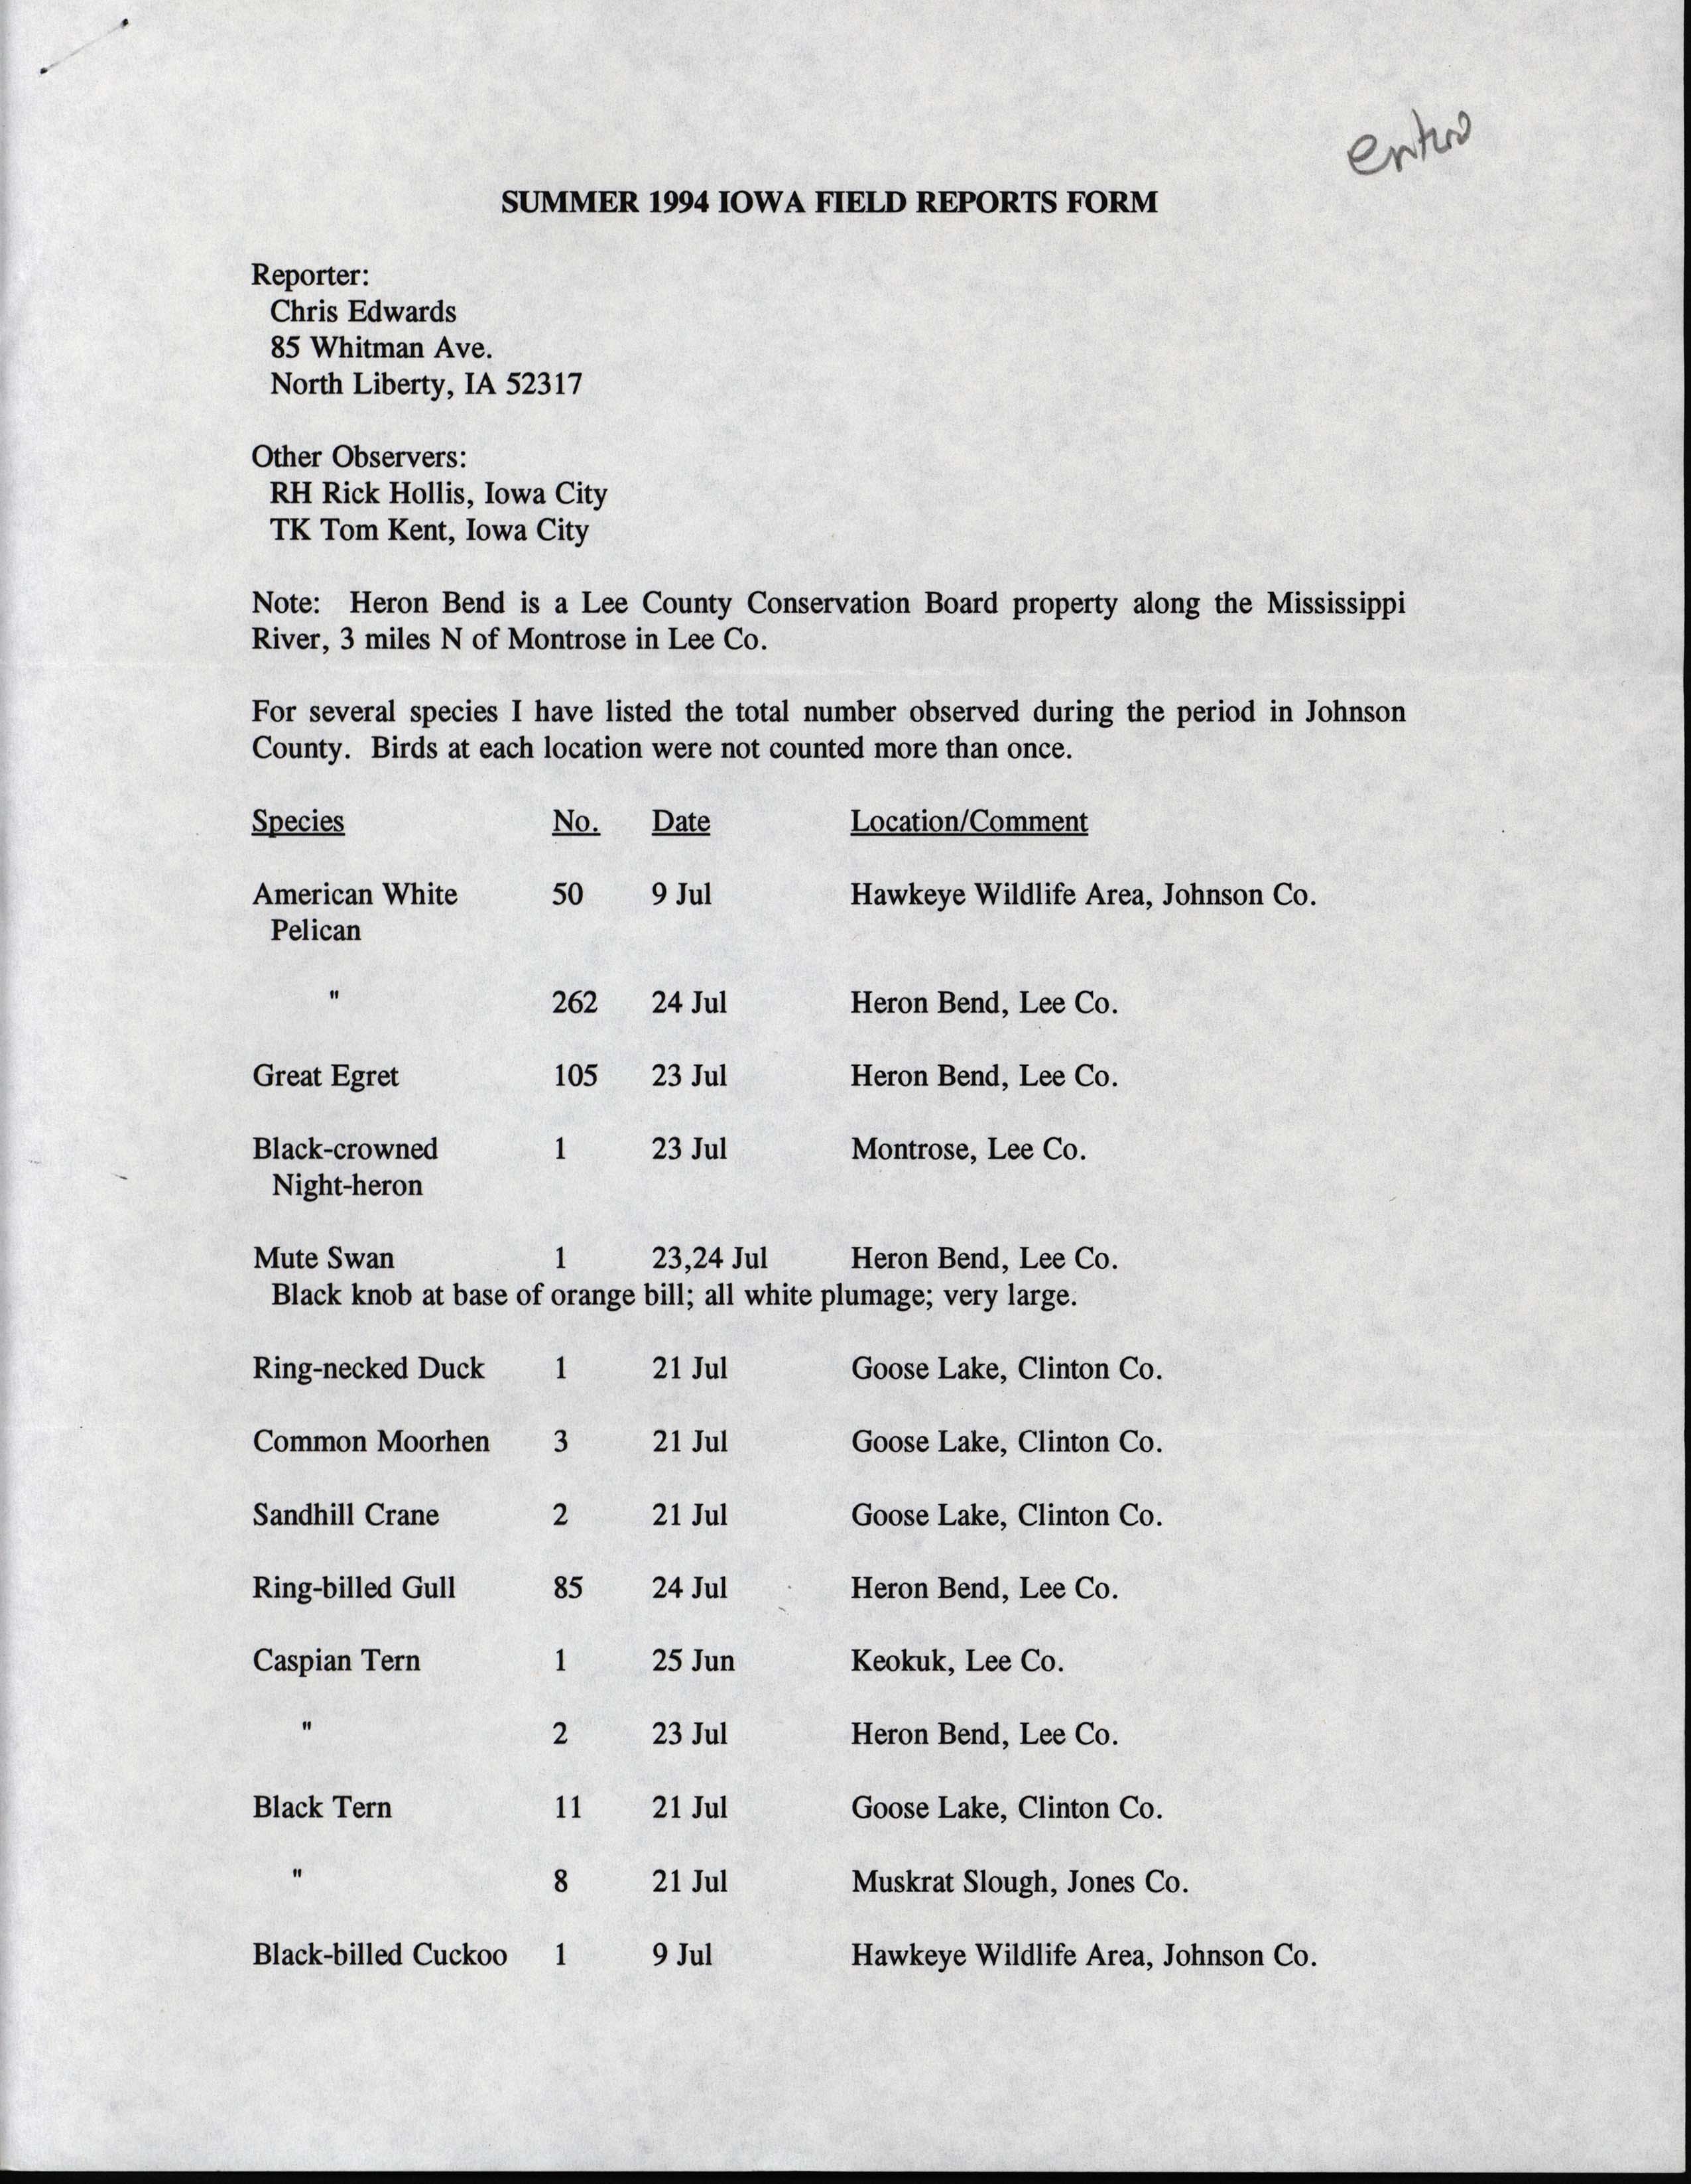 Summer 1994 Iowa field reports form, Chris Edwards